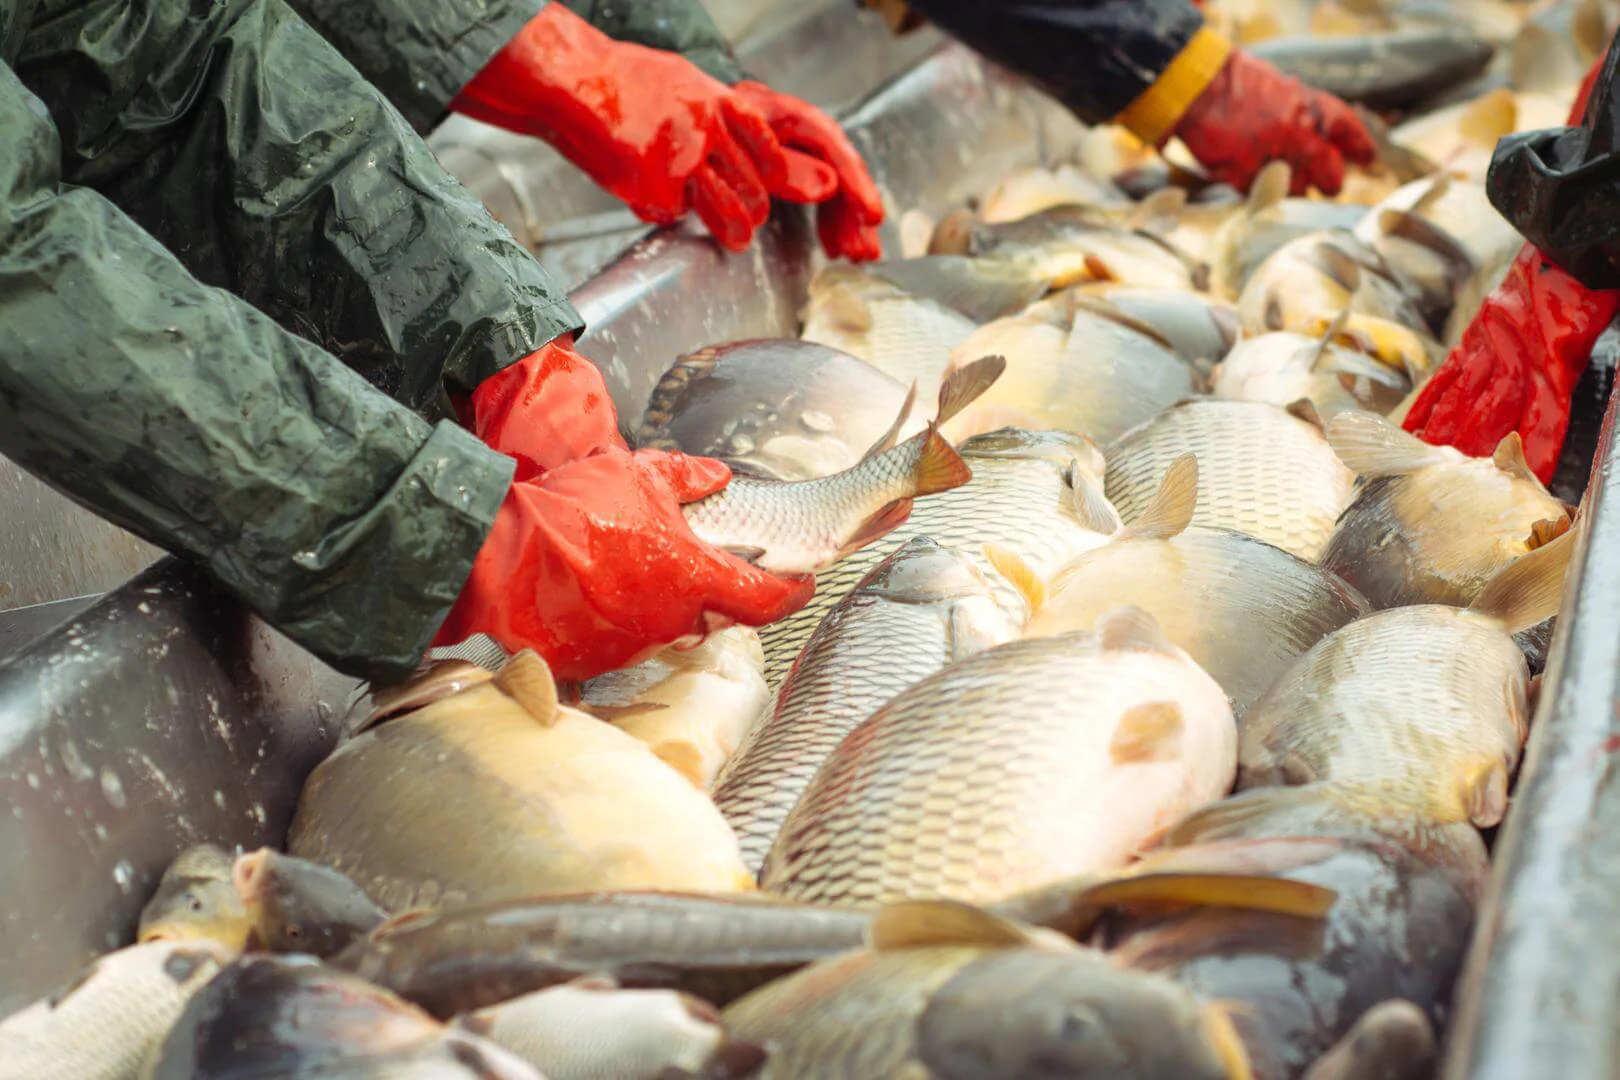 Aquaculture expansion drives surge in fish production